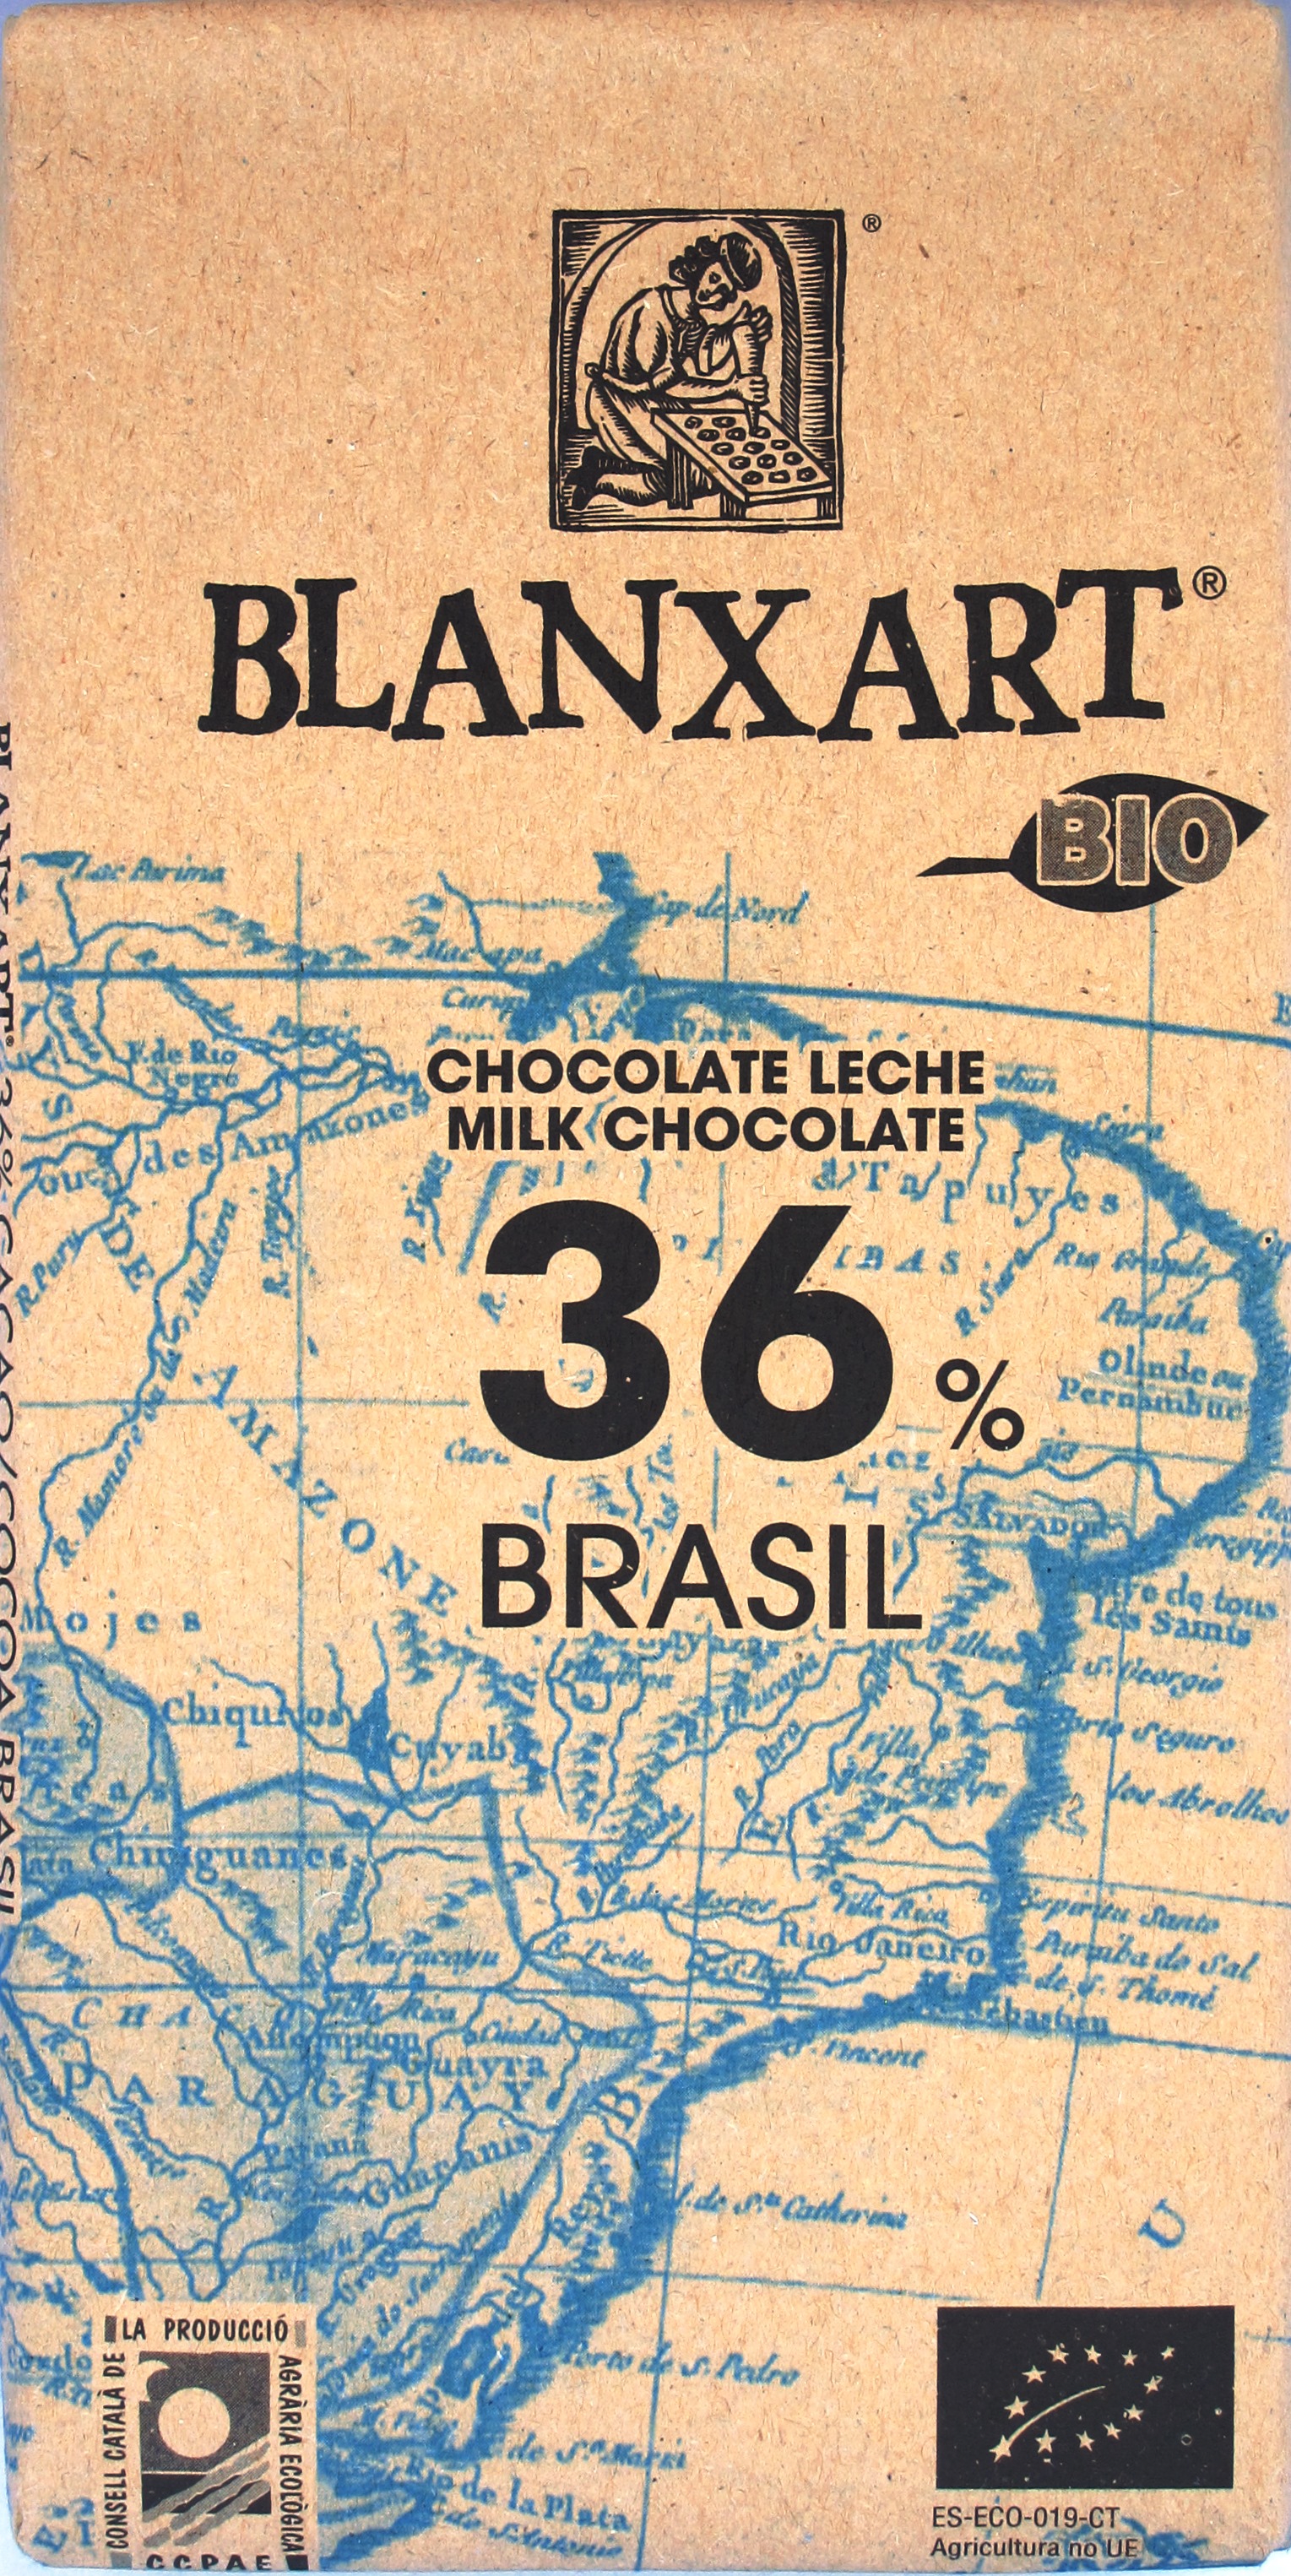 Blanxart Chocolate Leche 36% Brasil